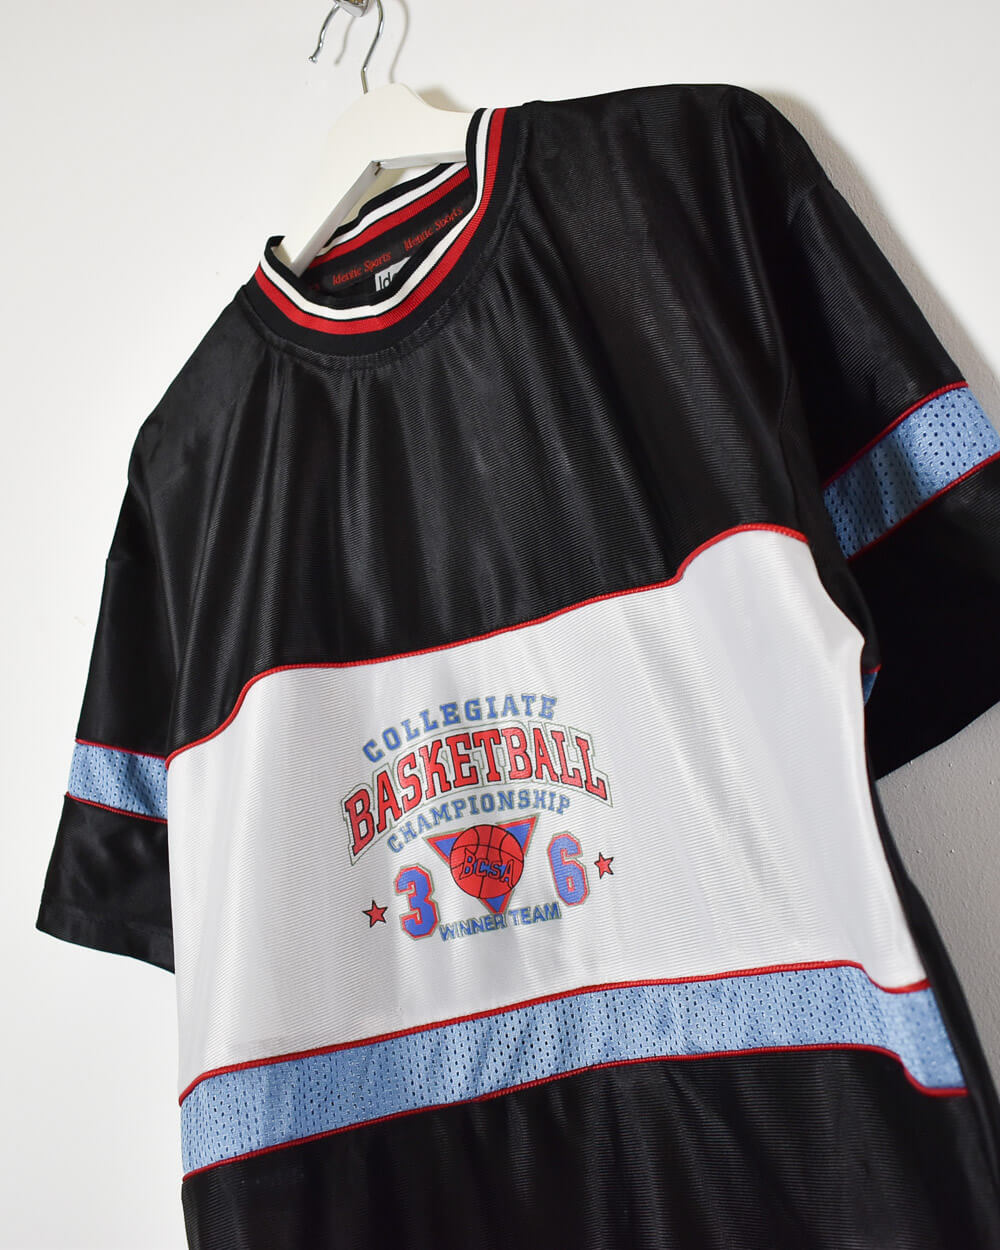 Black Collegiate Basketball Championship Winner Team T-Shirt - Large